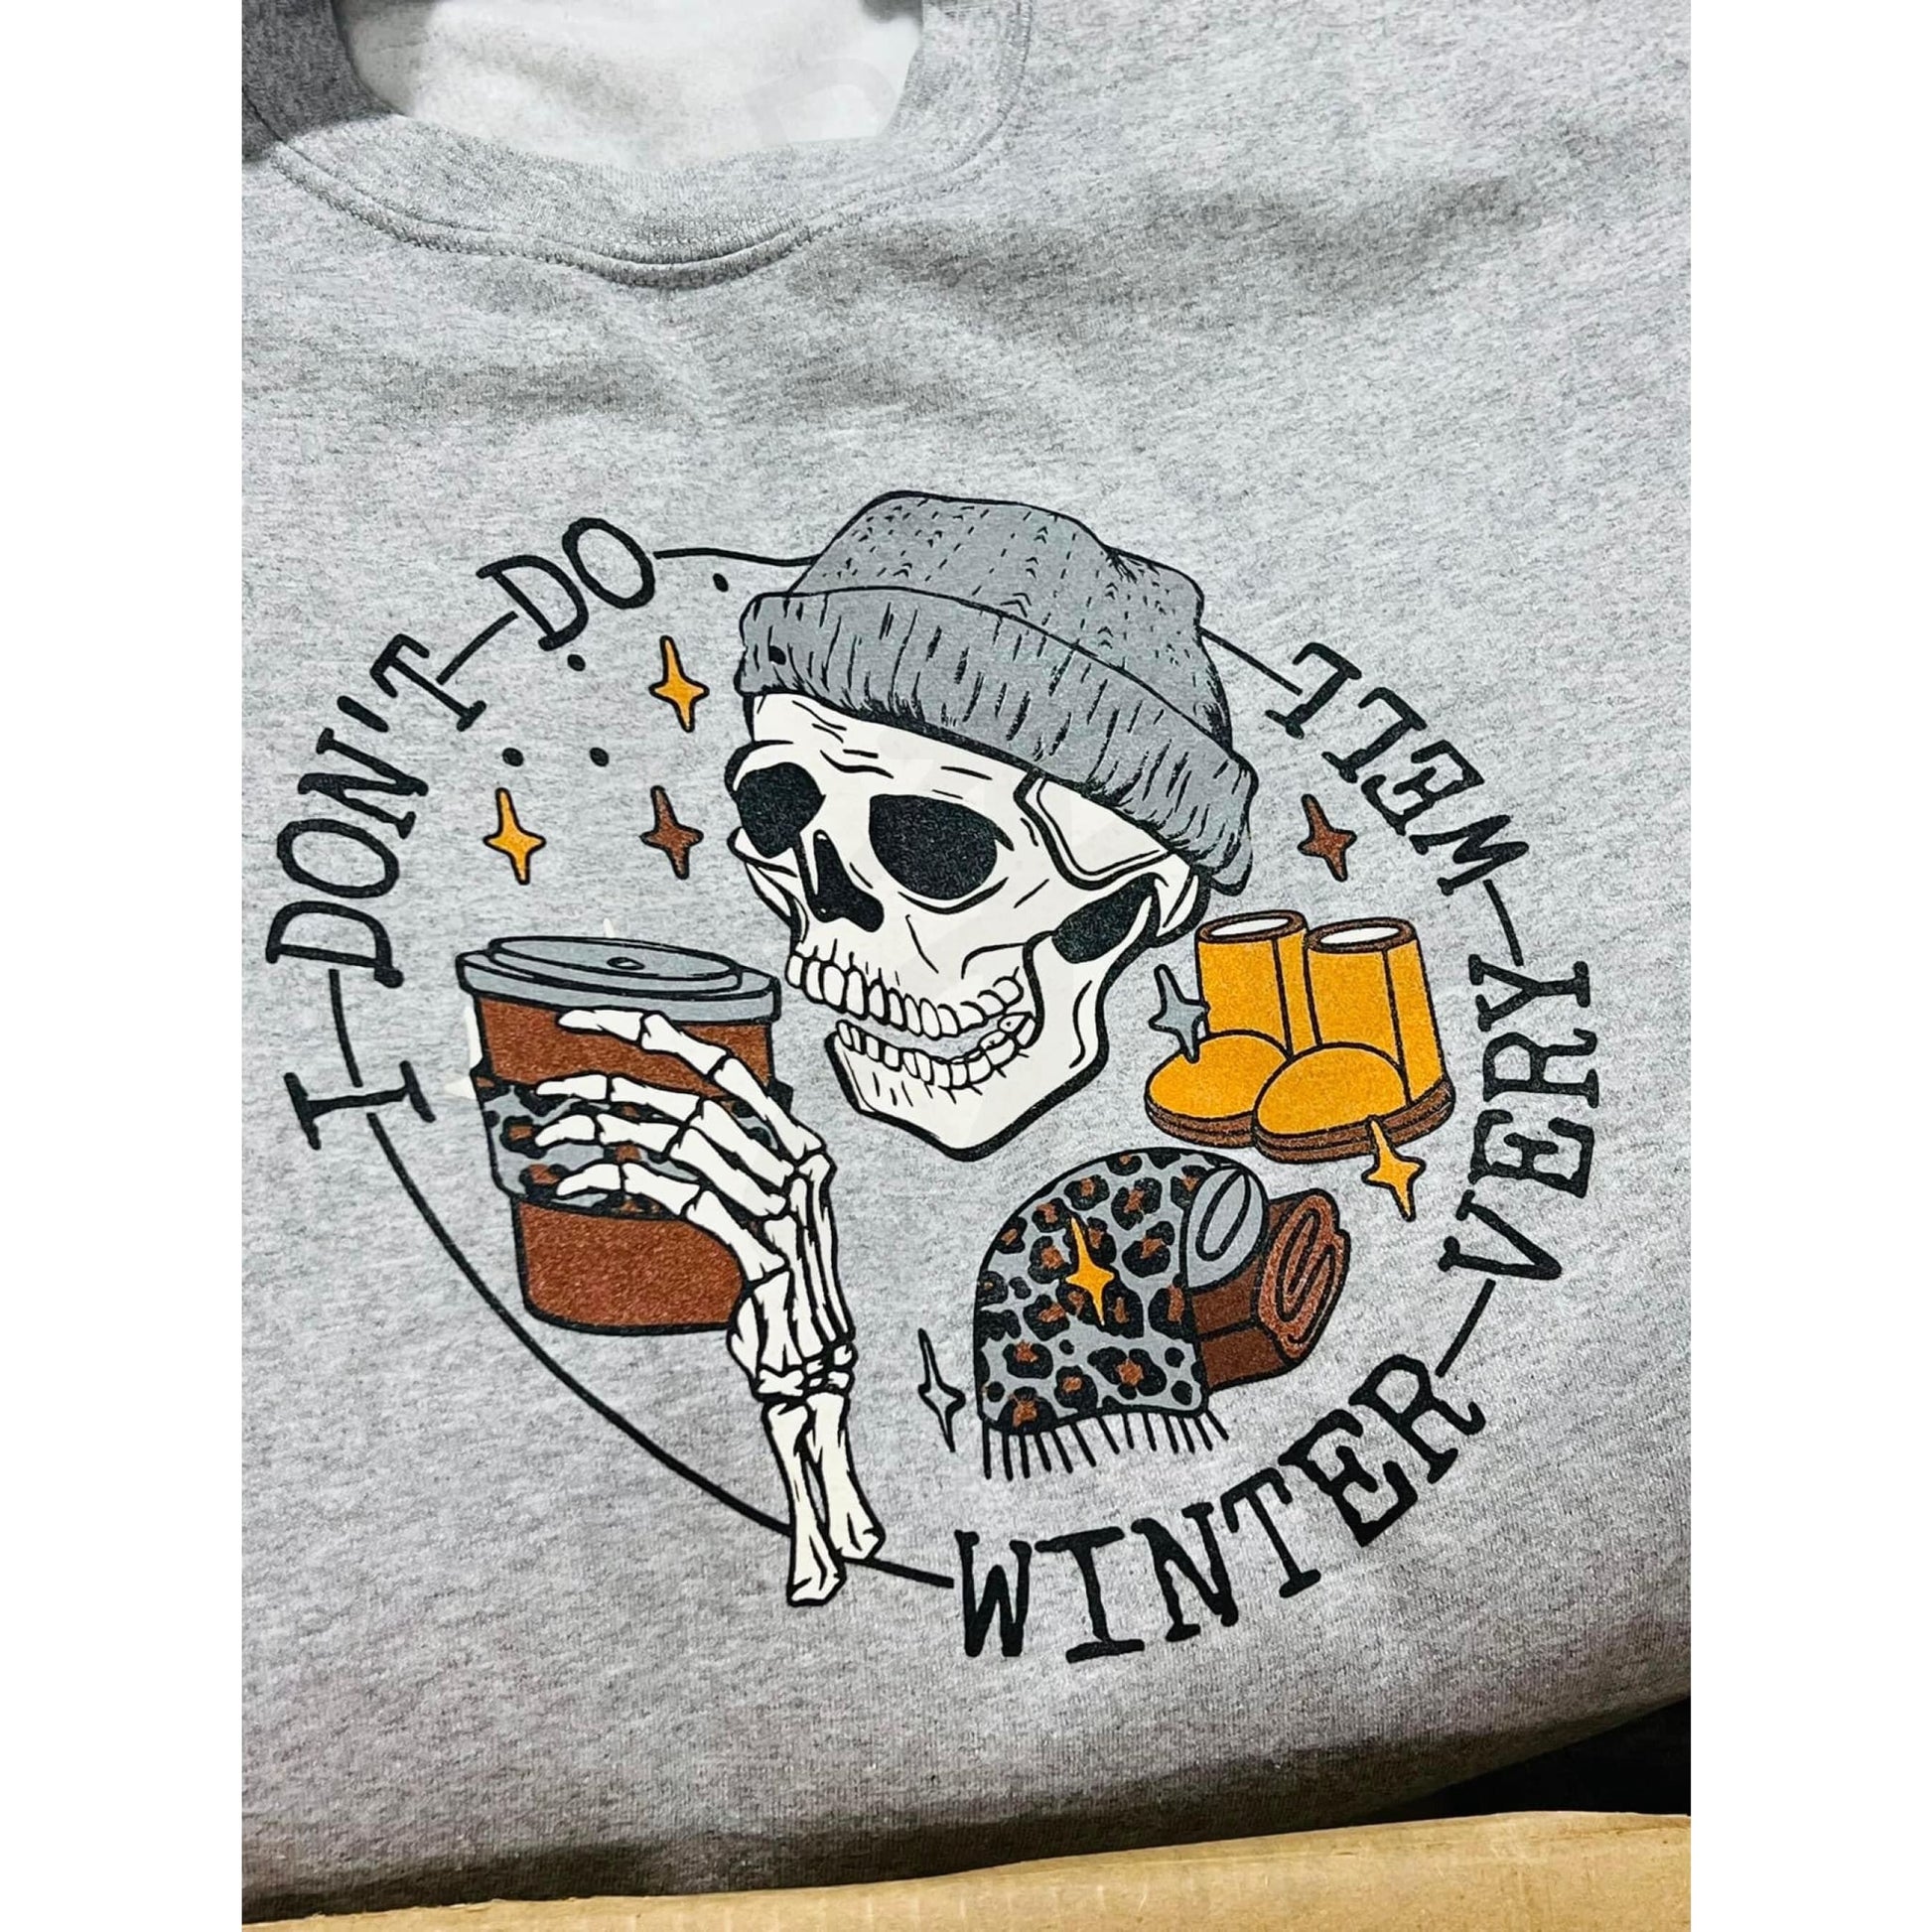 I Don’t Do Winter Very Well Crew Sweatshirt